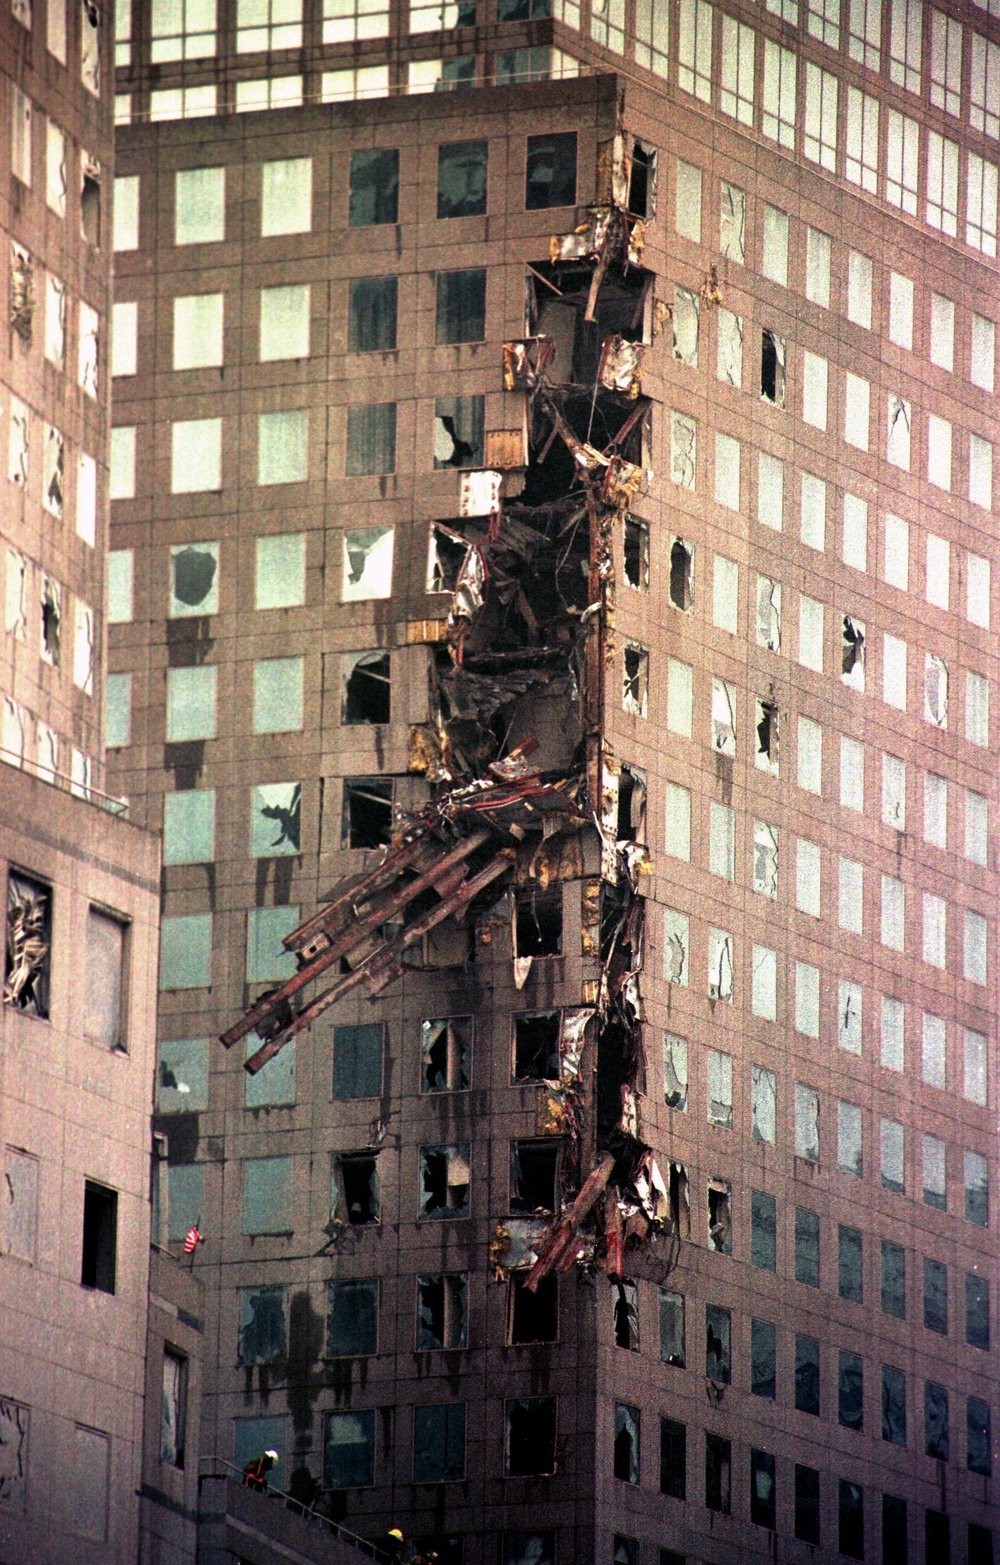 DVIDS - Images - Ground Zero, Sept. 14, 2001 [Image 6 of 31]